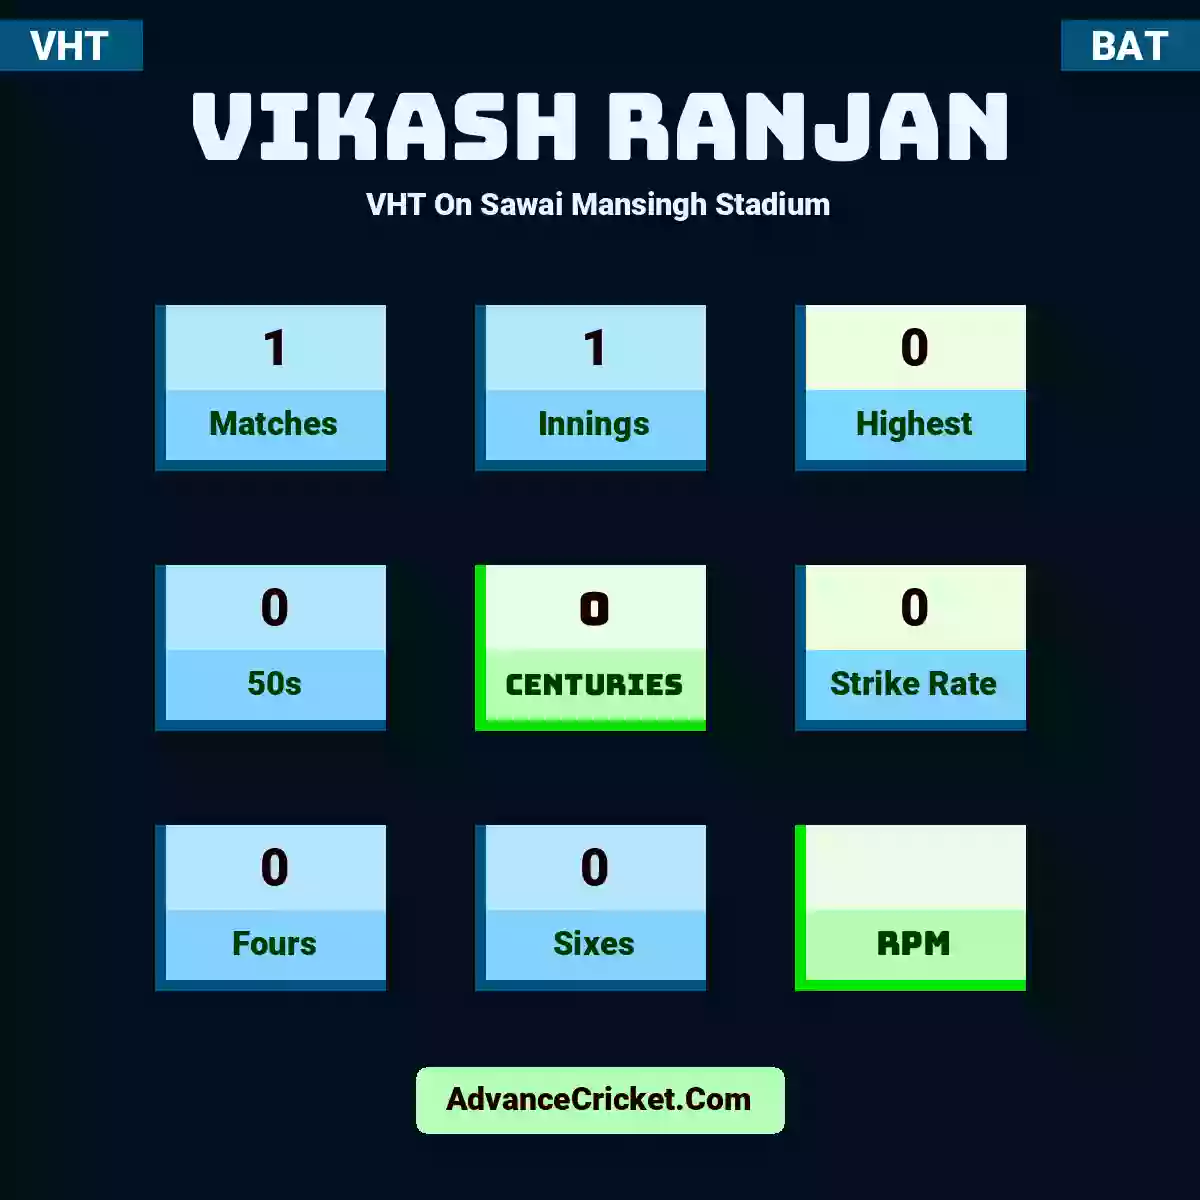 Vikash Ranjan VHT  On Sawai Mansingh Stadium, Vikash Ranjan played 1 matches, scored 0 runs as highest, 0 half-centuries, and 0 centuries, with a strike rate of 0. V.Ranjan hit 0 fours and 0 sixes.